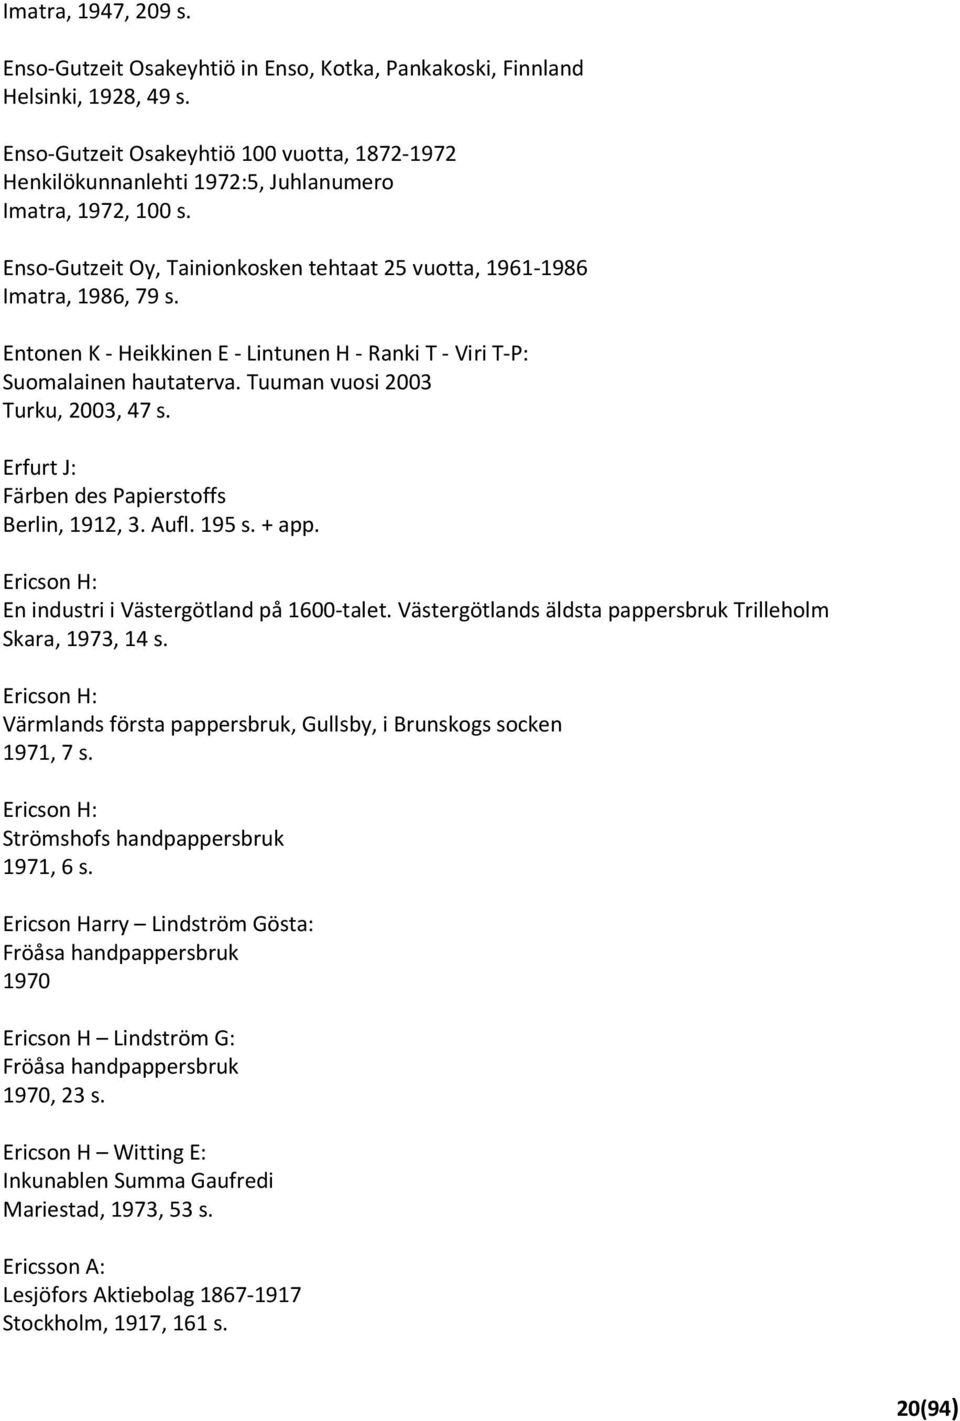 Entonen K - Heikkinen E - Lintunen H - Ranki T - Viri T-P: Suomalainen hautaterva. Tuuman vuosi 2003 Turku, 2003, 47 s. Erfurt J: Färben des Papierstoffs Berlin, 1912, 3. Aufl. 195 s. + app.